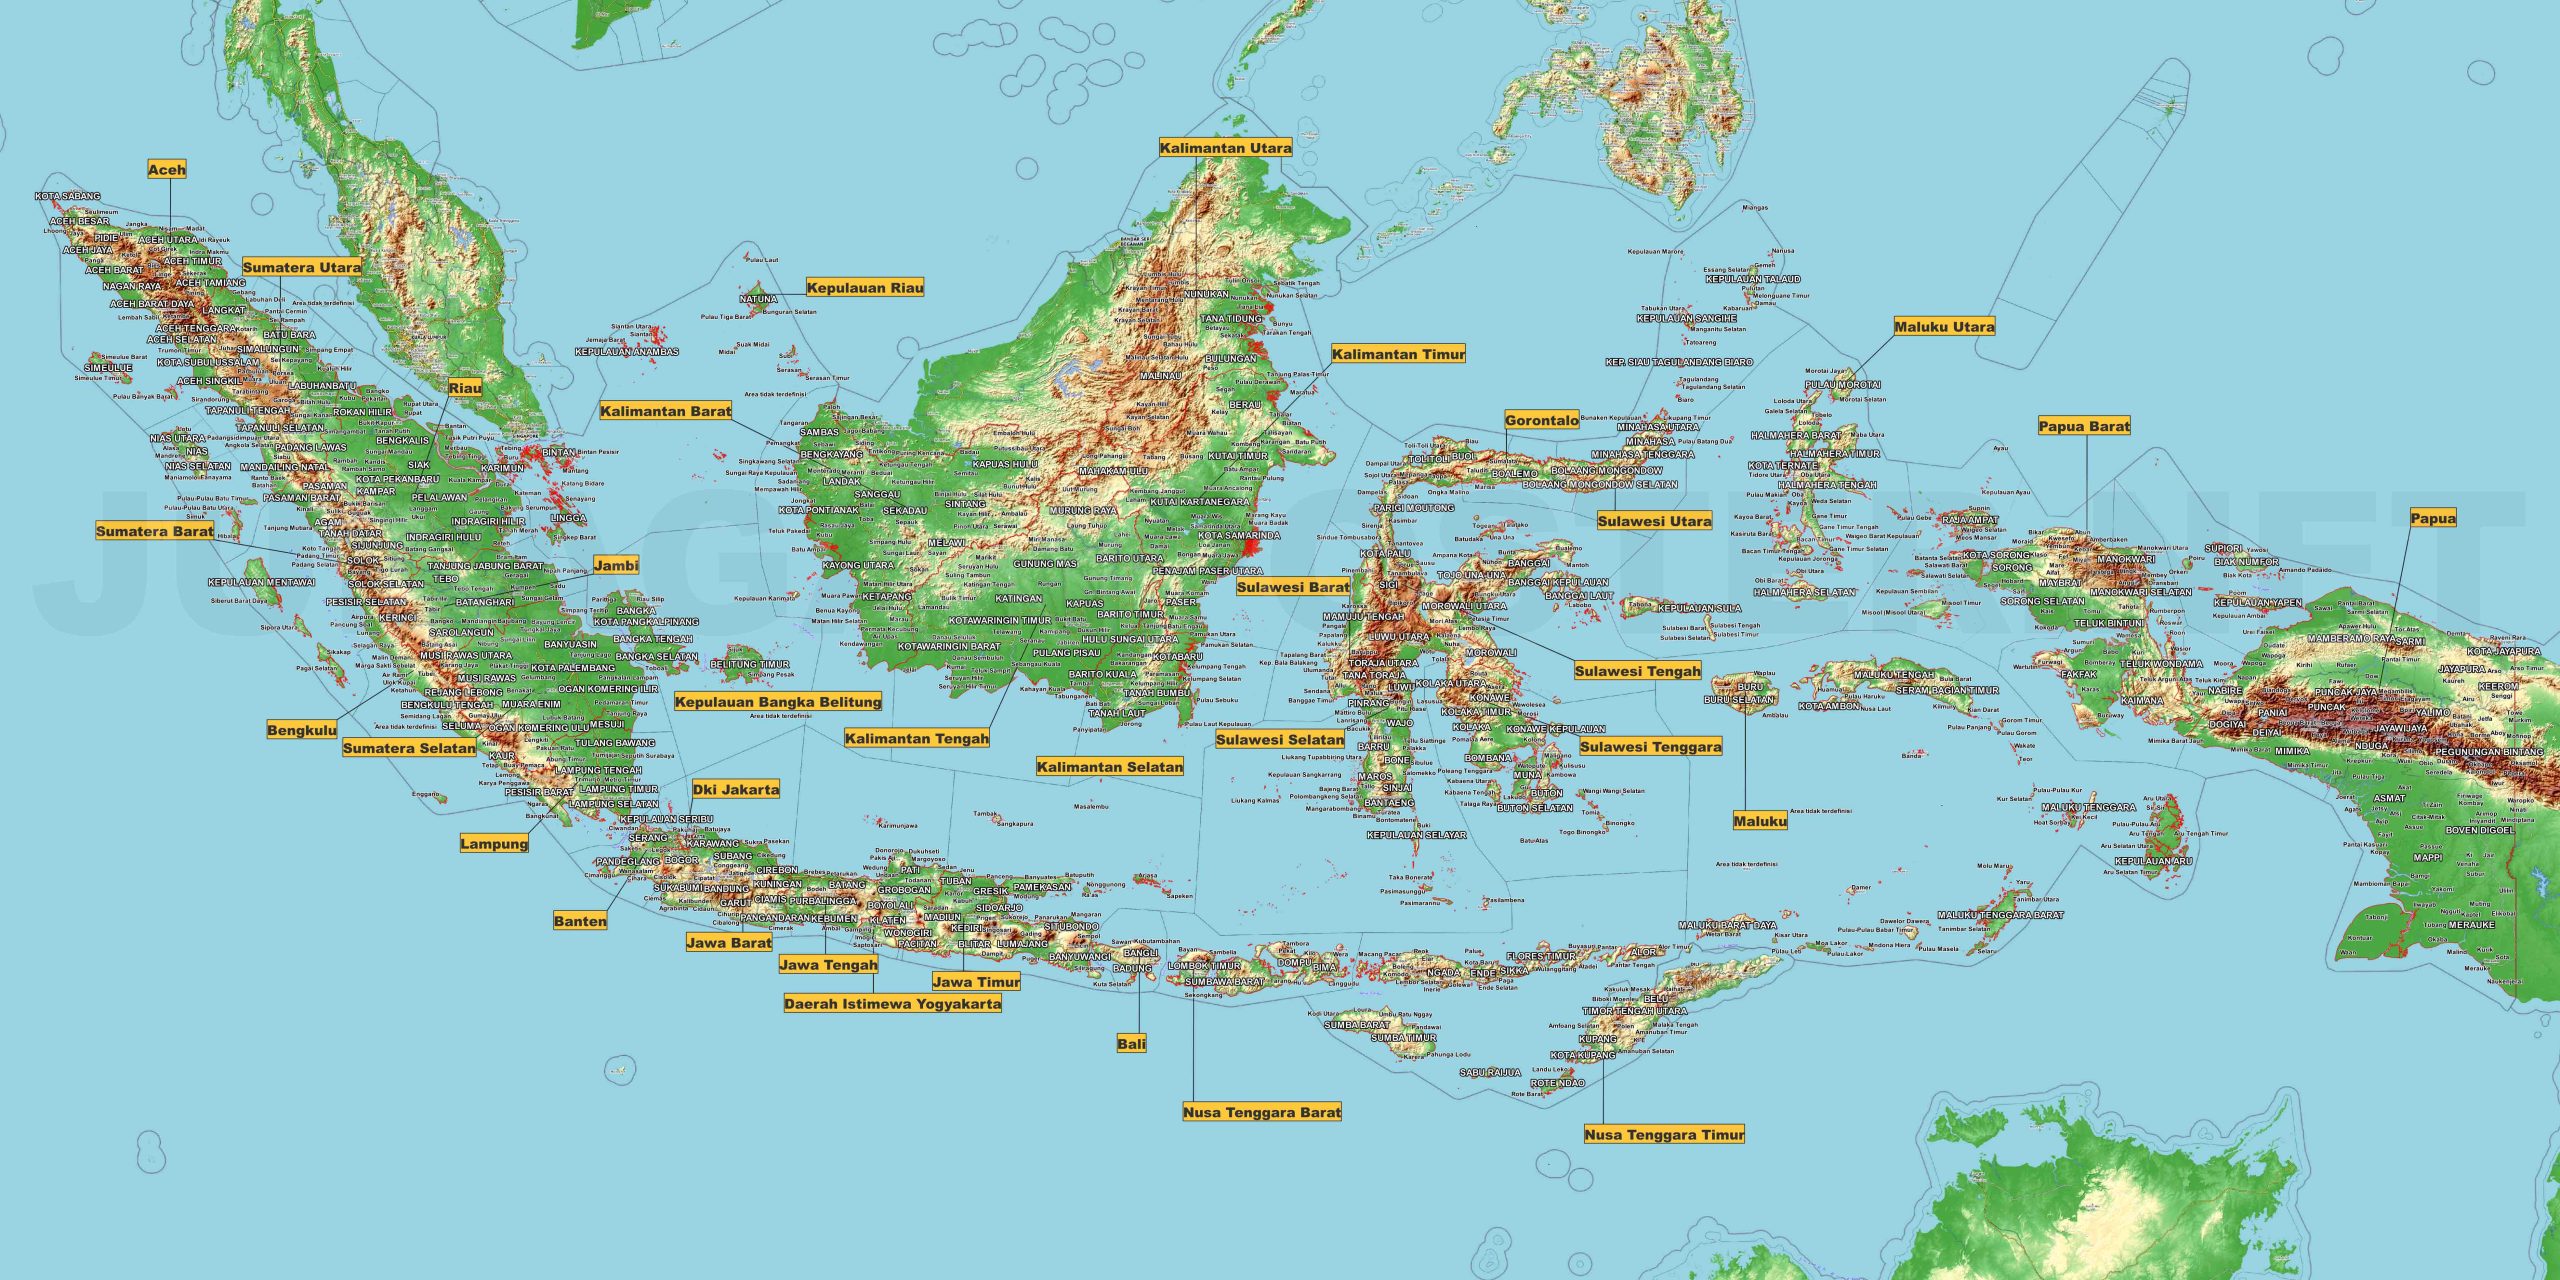 Peta Indonesia Berwarna: Keindahan Peta dalam Warna-warna